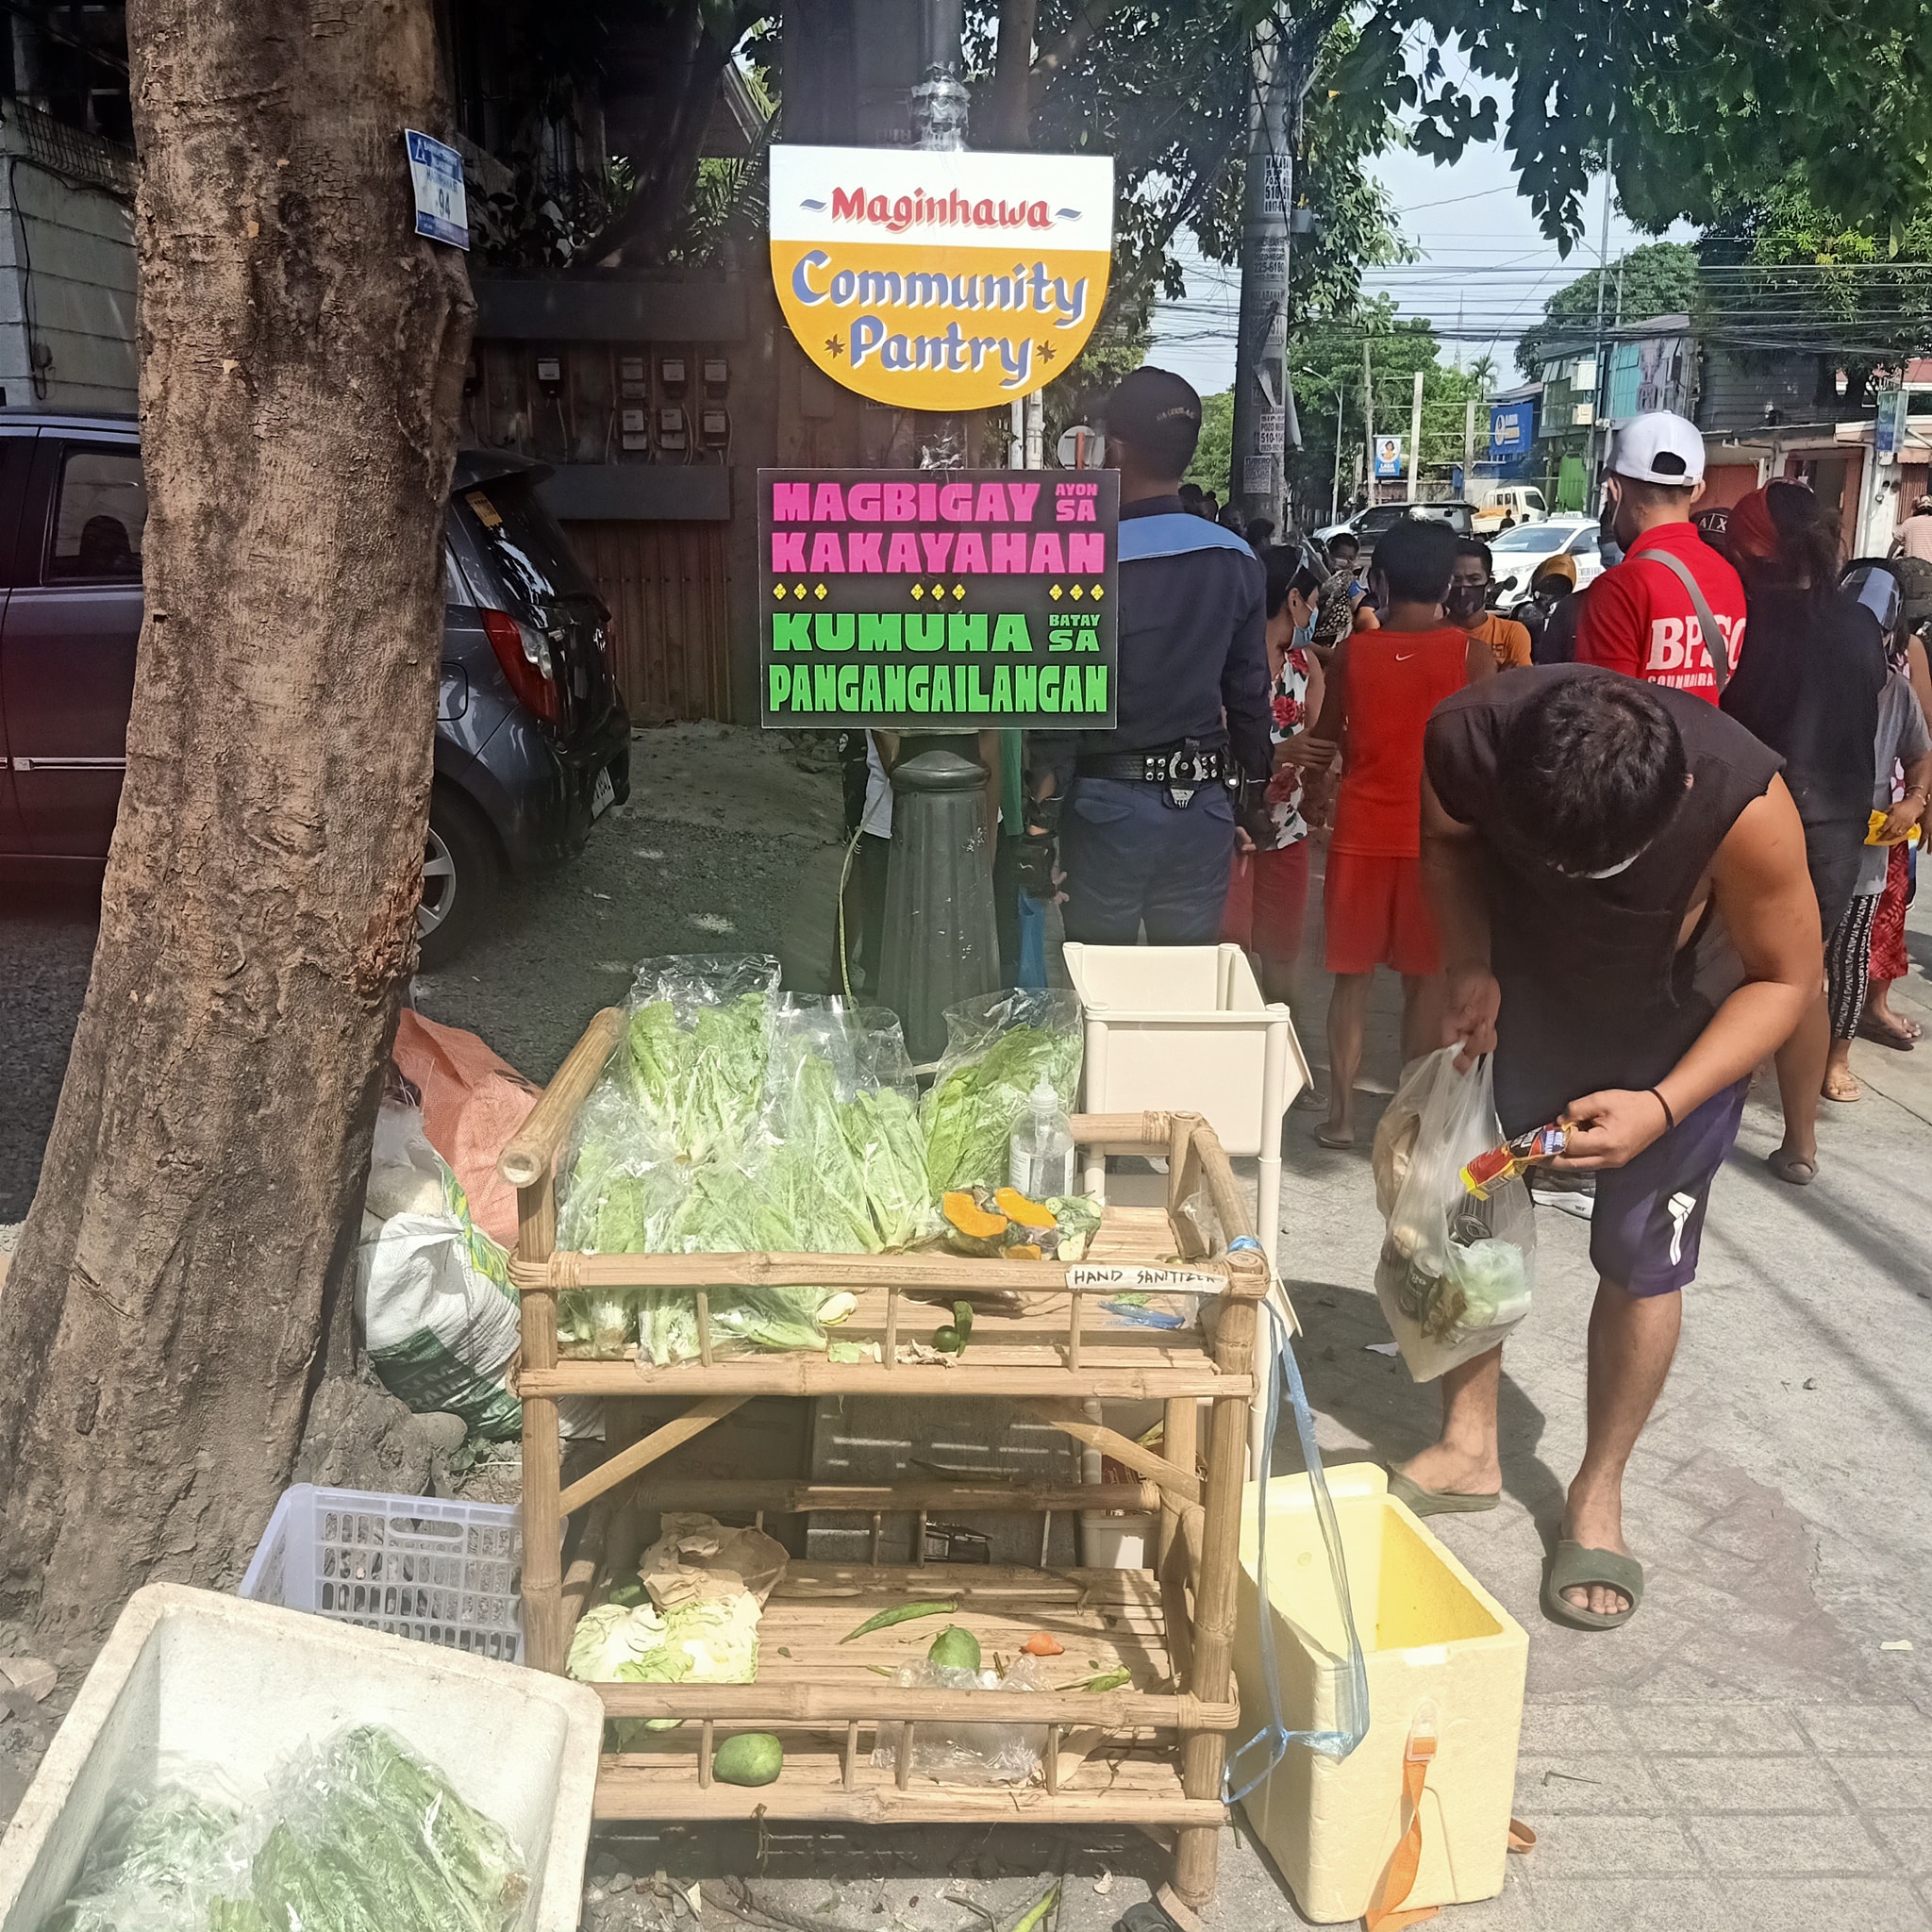 Community Pantries Philippines - Maginhawa Food Pantry